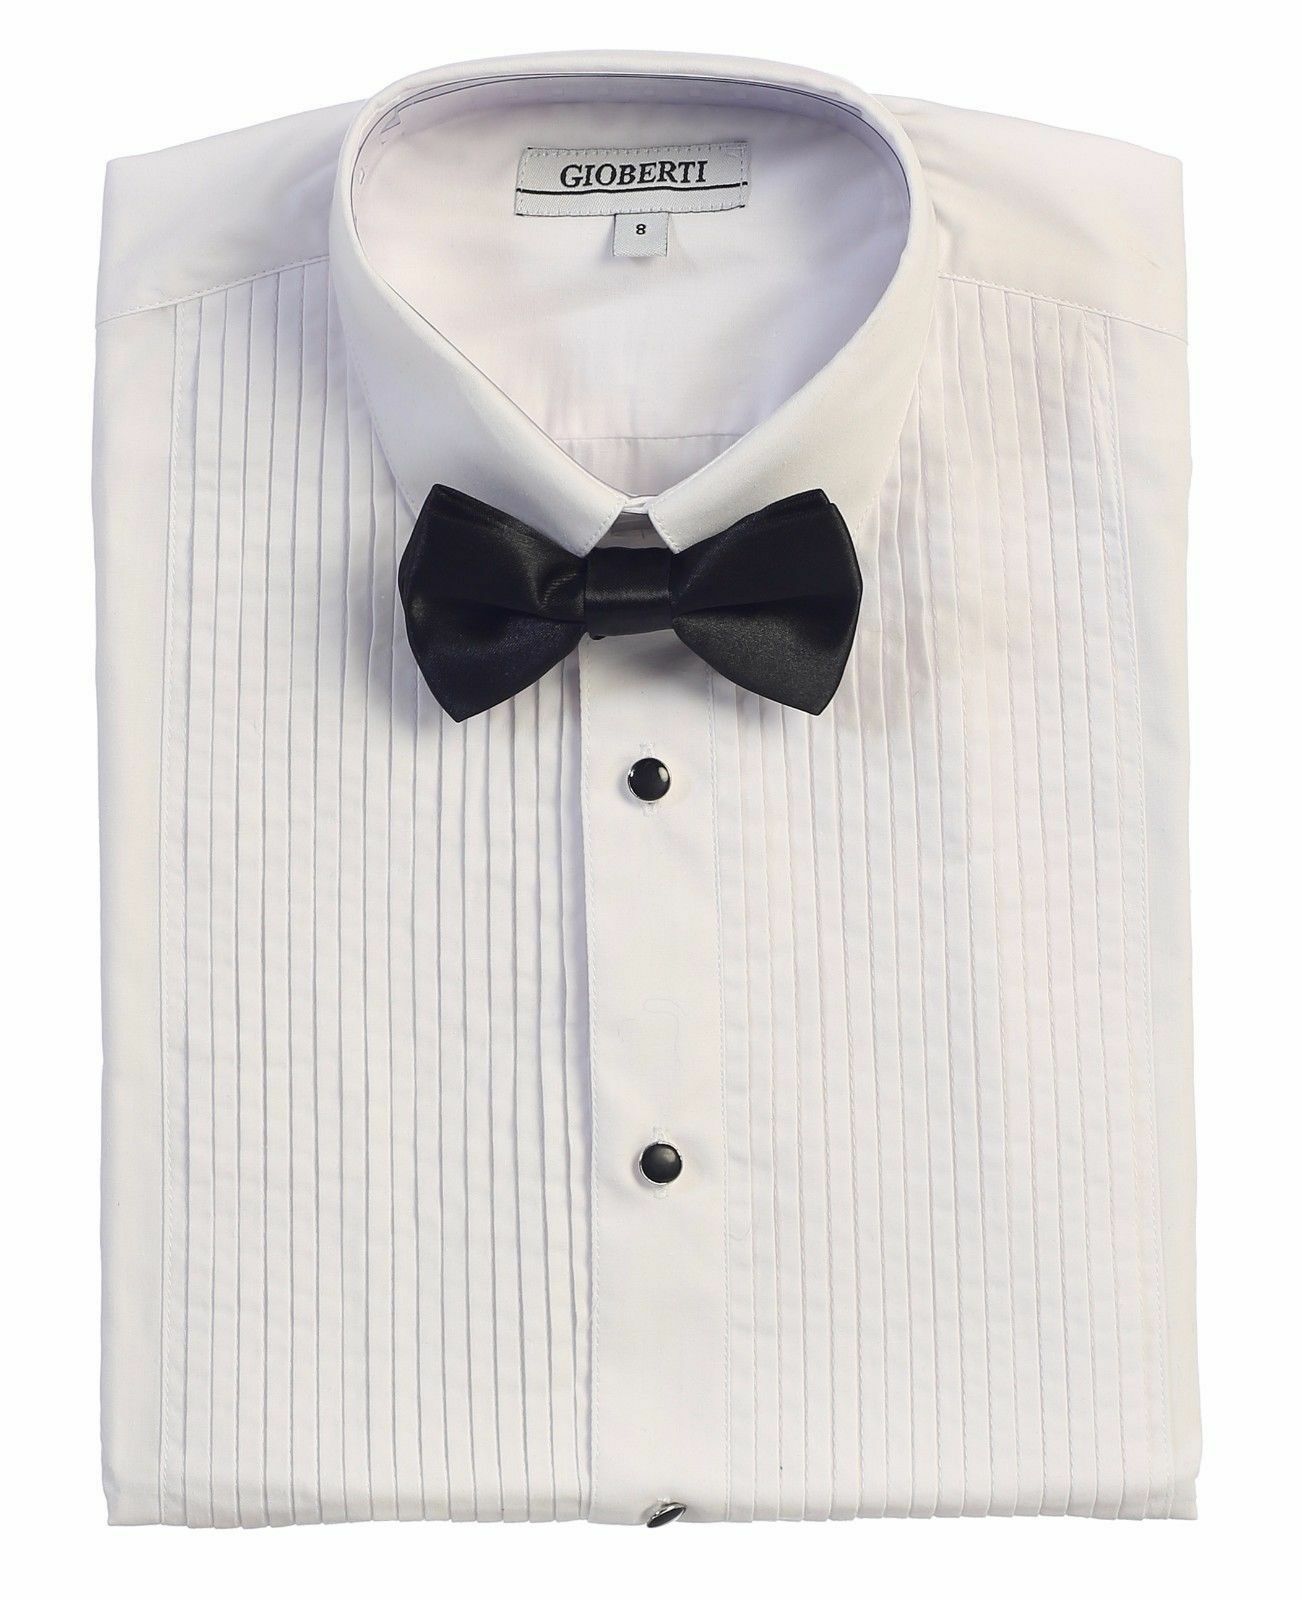 Boy Tuxedo Dress Shirt Wingtip White Bow Tie Suspender Kids Toddler Size 2T- 18